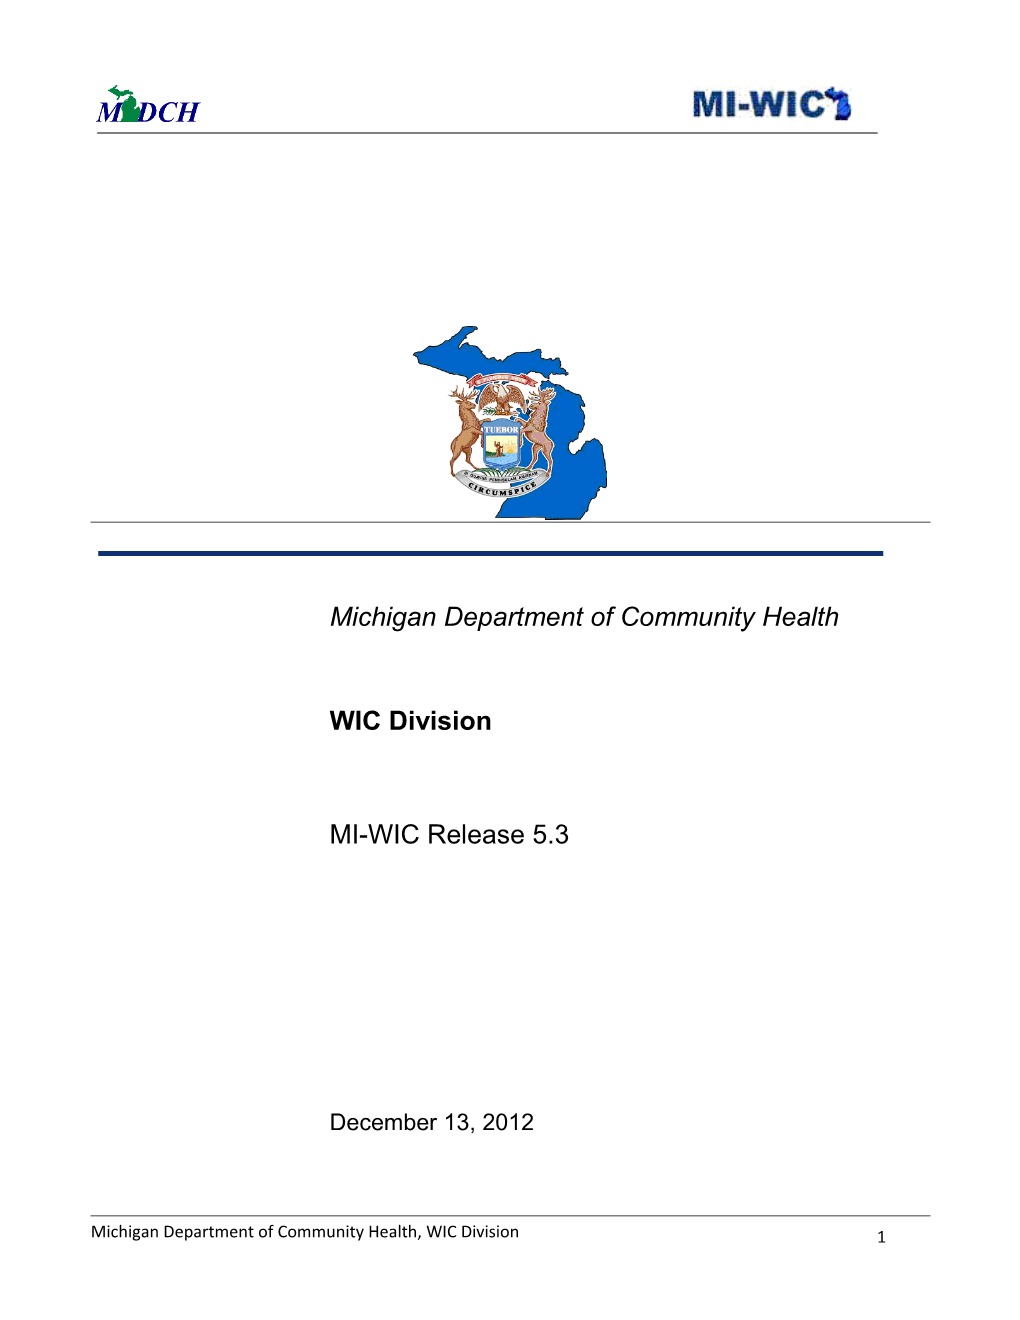 Michigan WIC Program